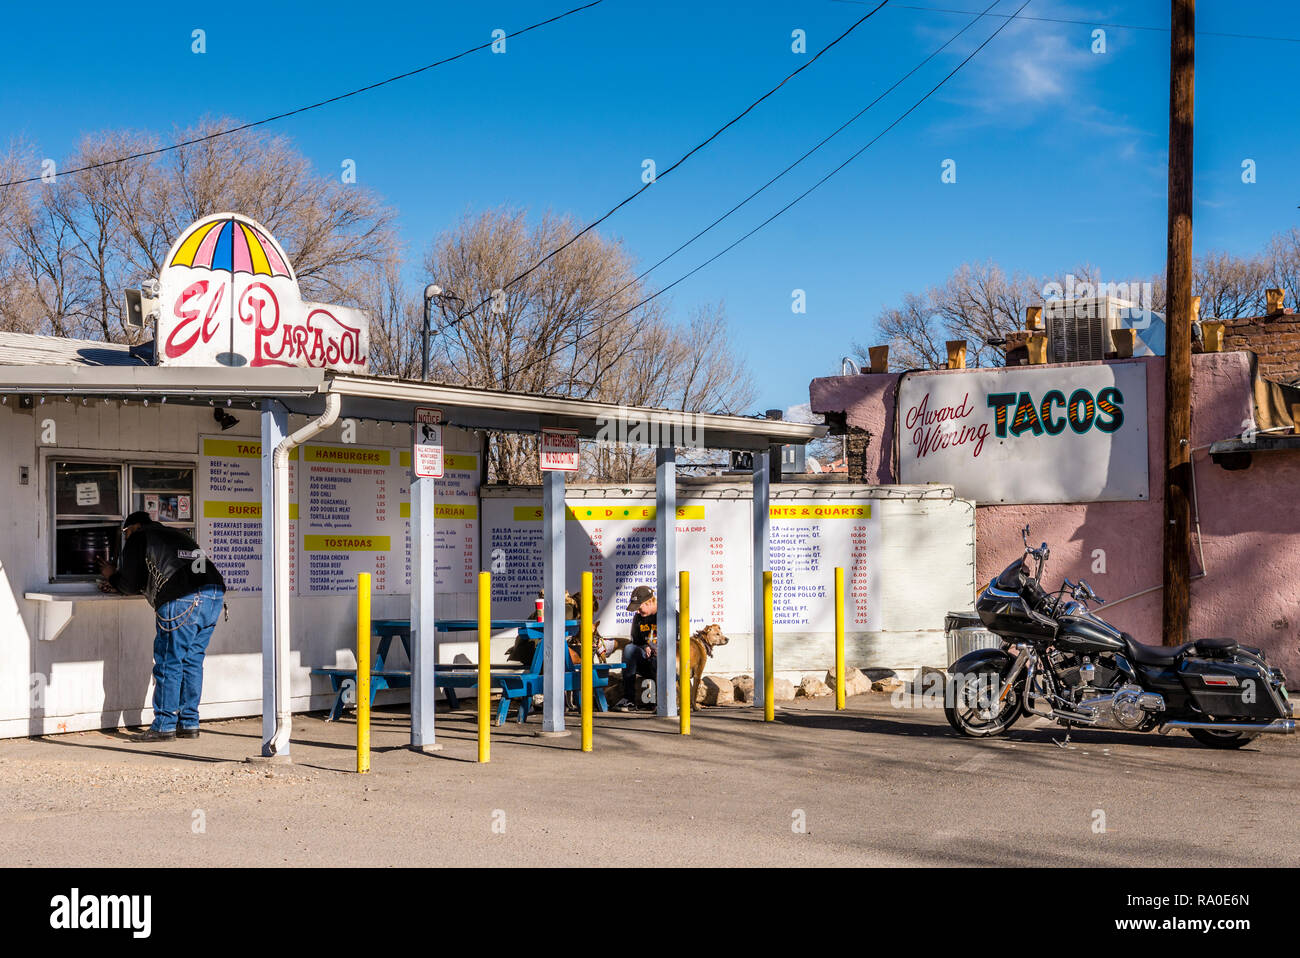 El Parasol Restaurant in Espanola, New Mexico, USA Stock Photo